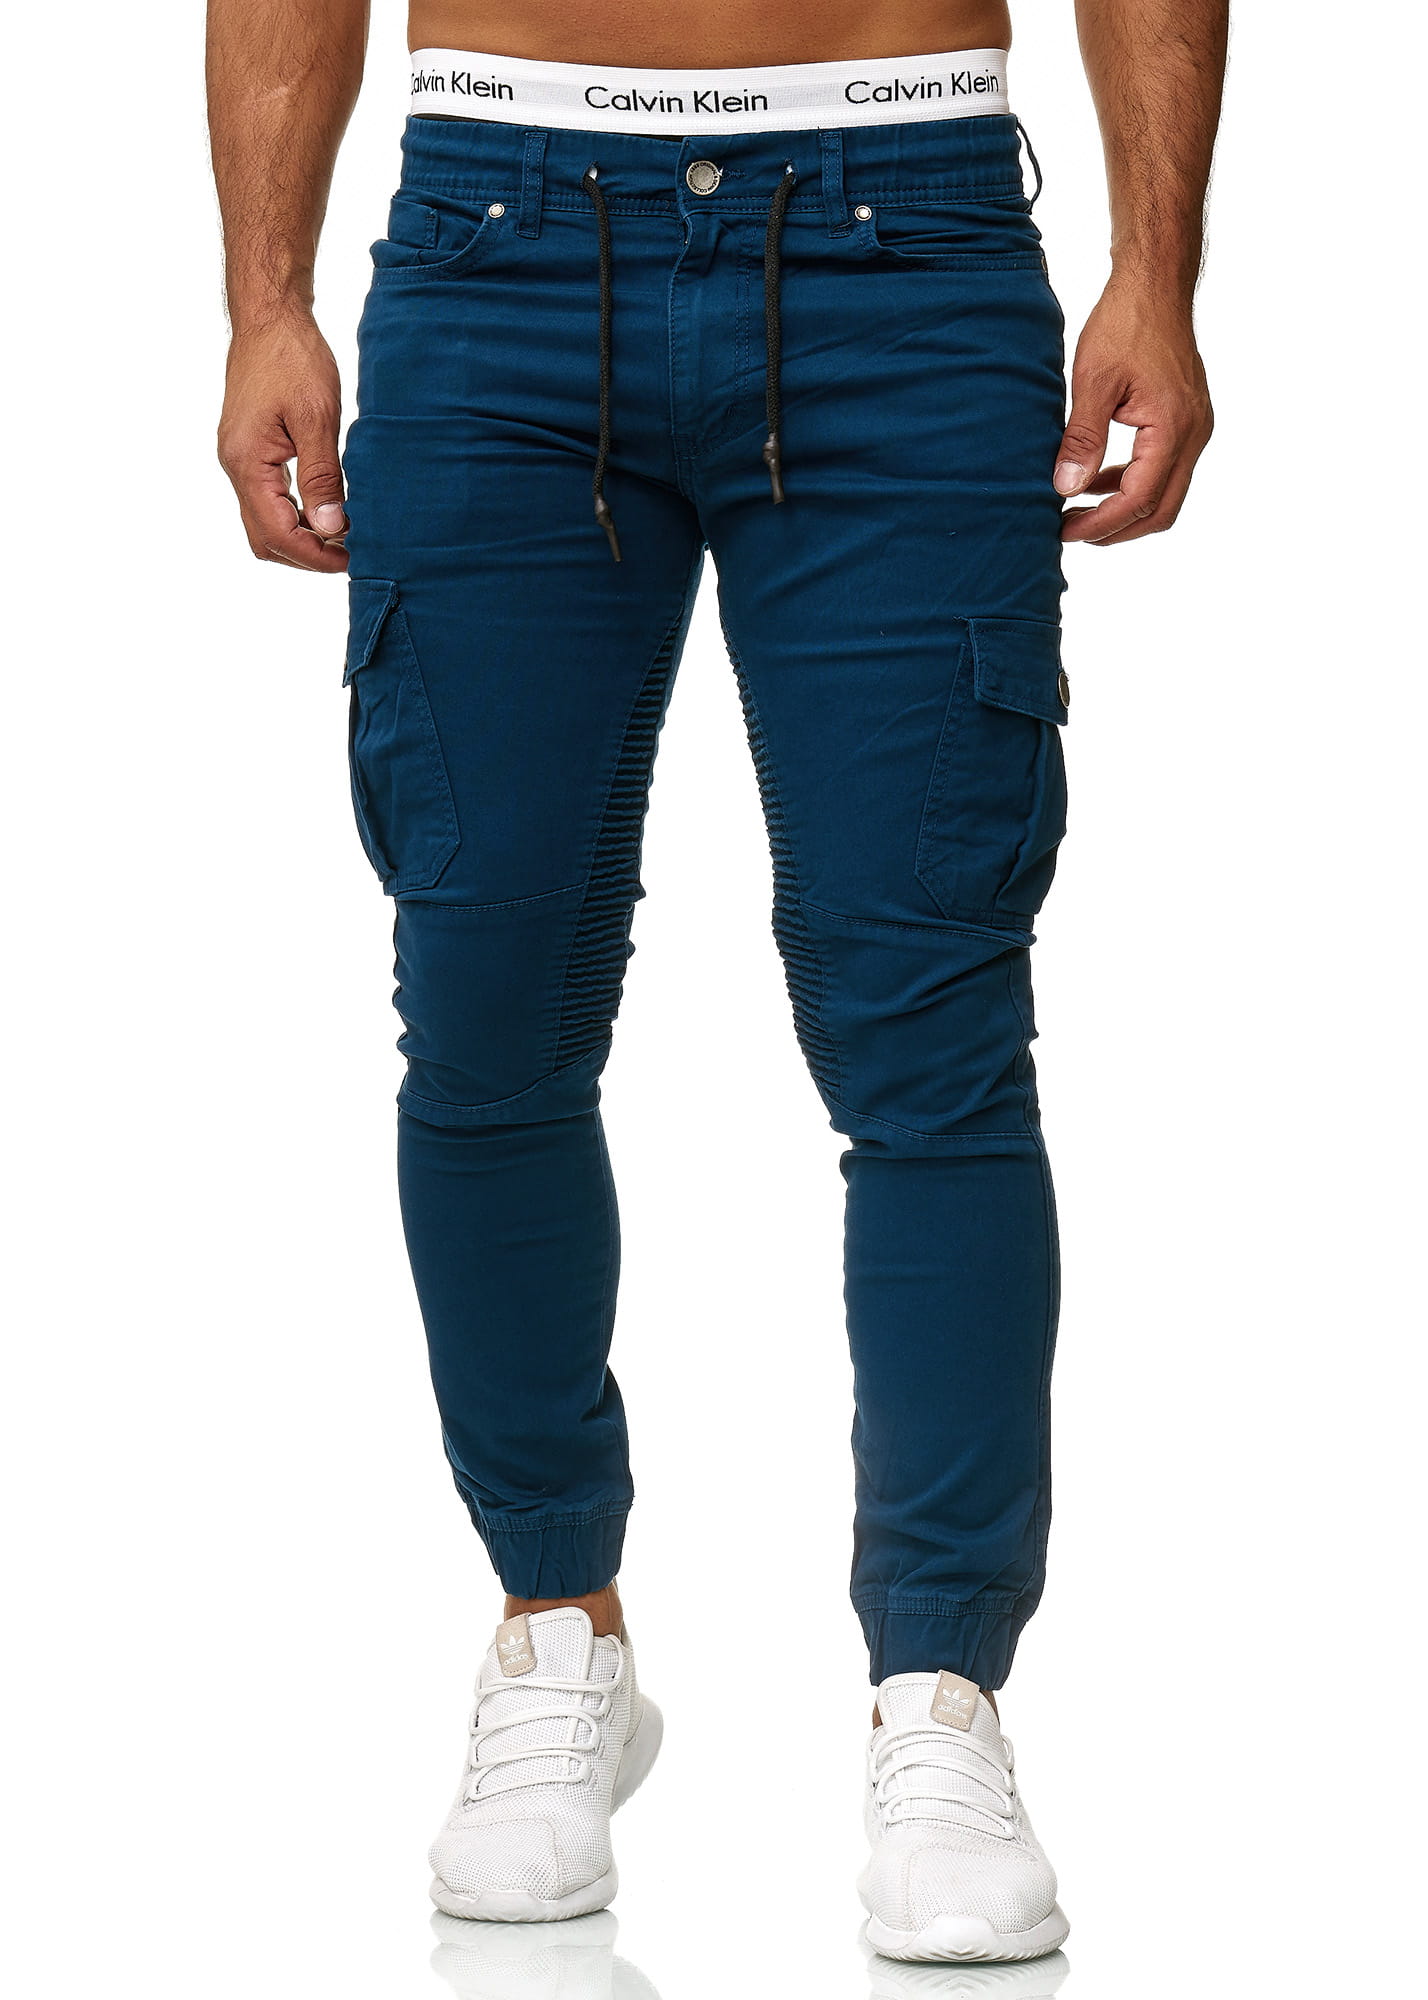 Herren Chino Hose Jeans Designer Chinohose Slim Fit Männer Skinny 3207C ...